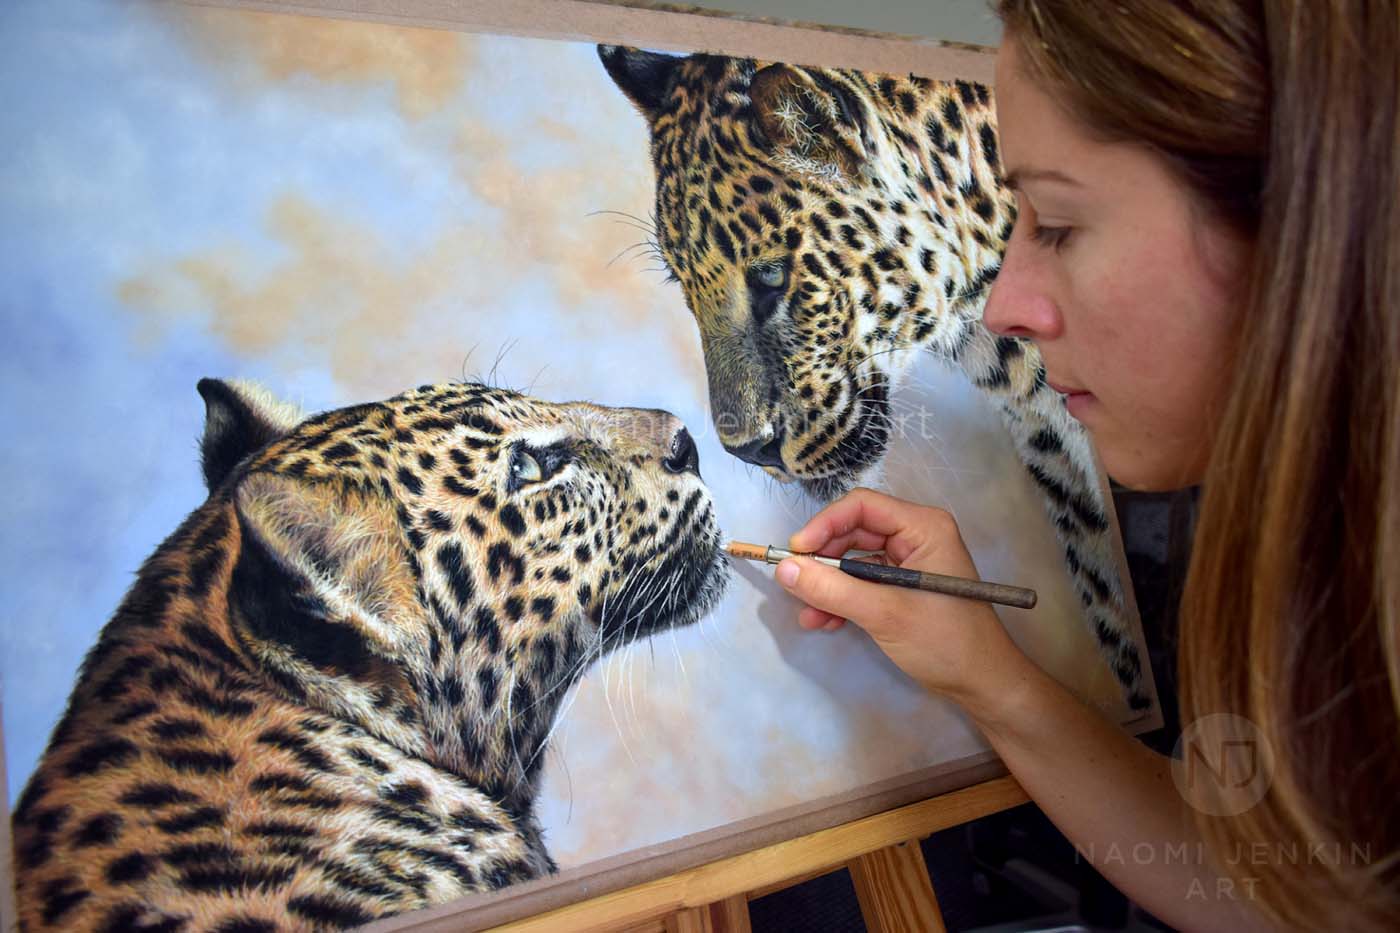 Wildlife artist Naomi Jenkin drawing a leopard portrait.